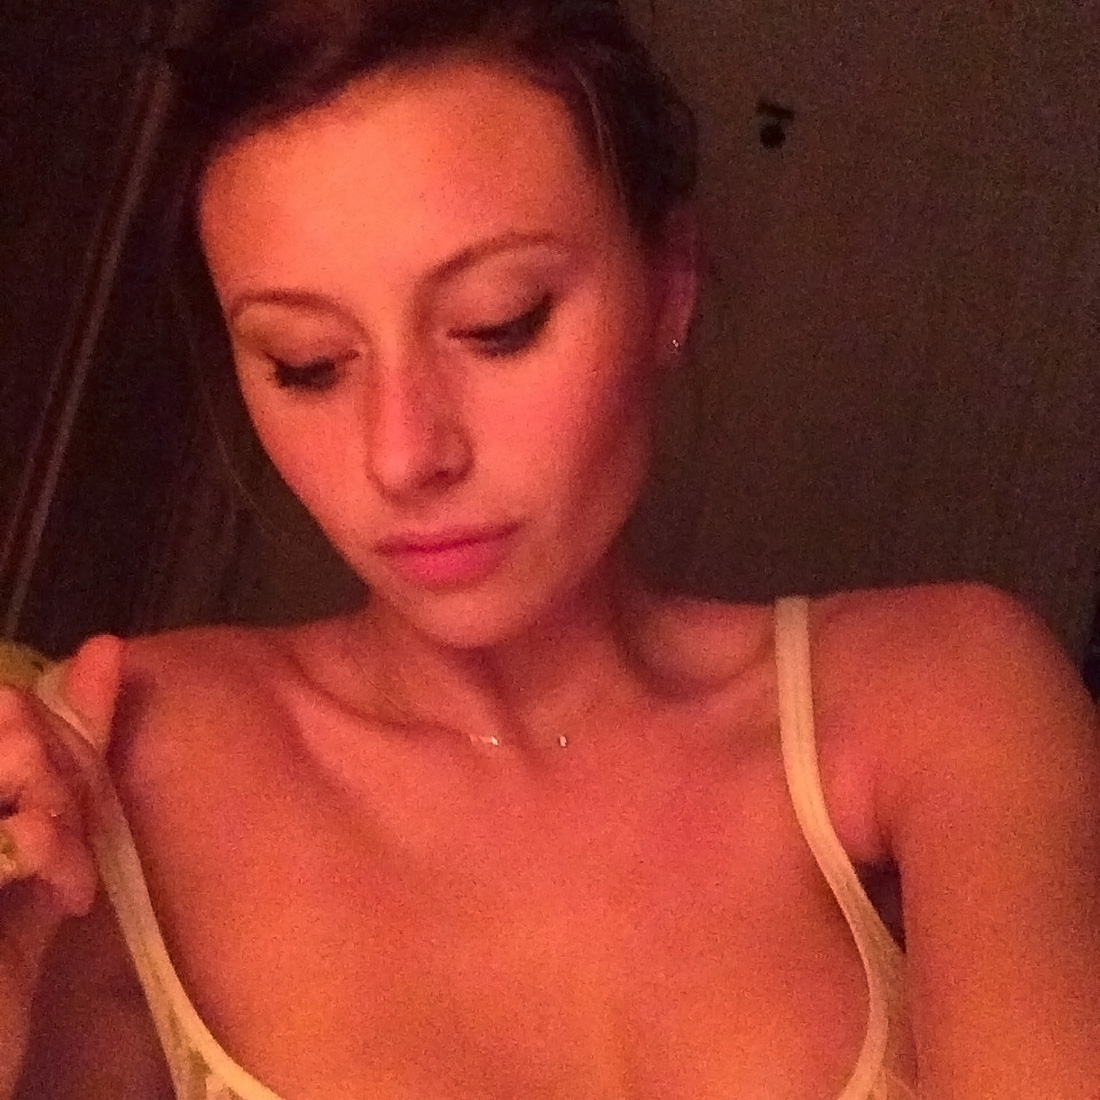 Aly Michalka Leaked nudes 02